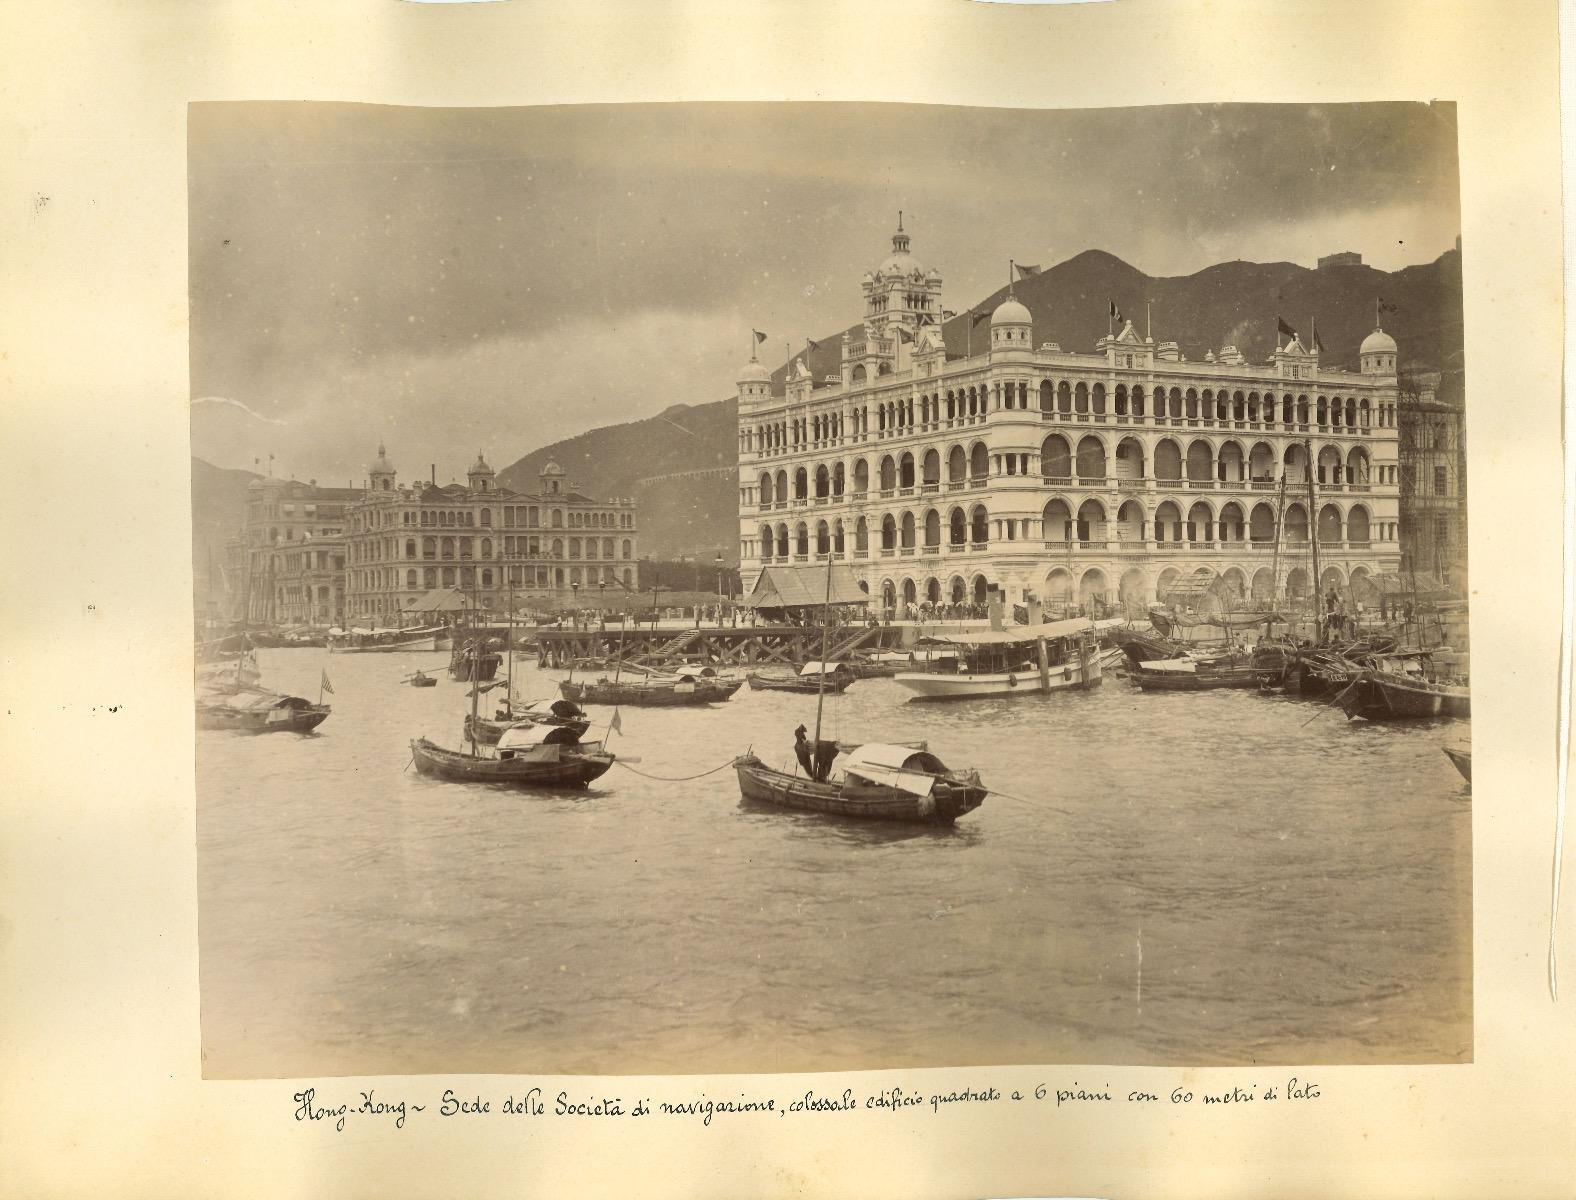 Ancient Views of Hong-Kong Photograph - Original Albumen Print - 1890s